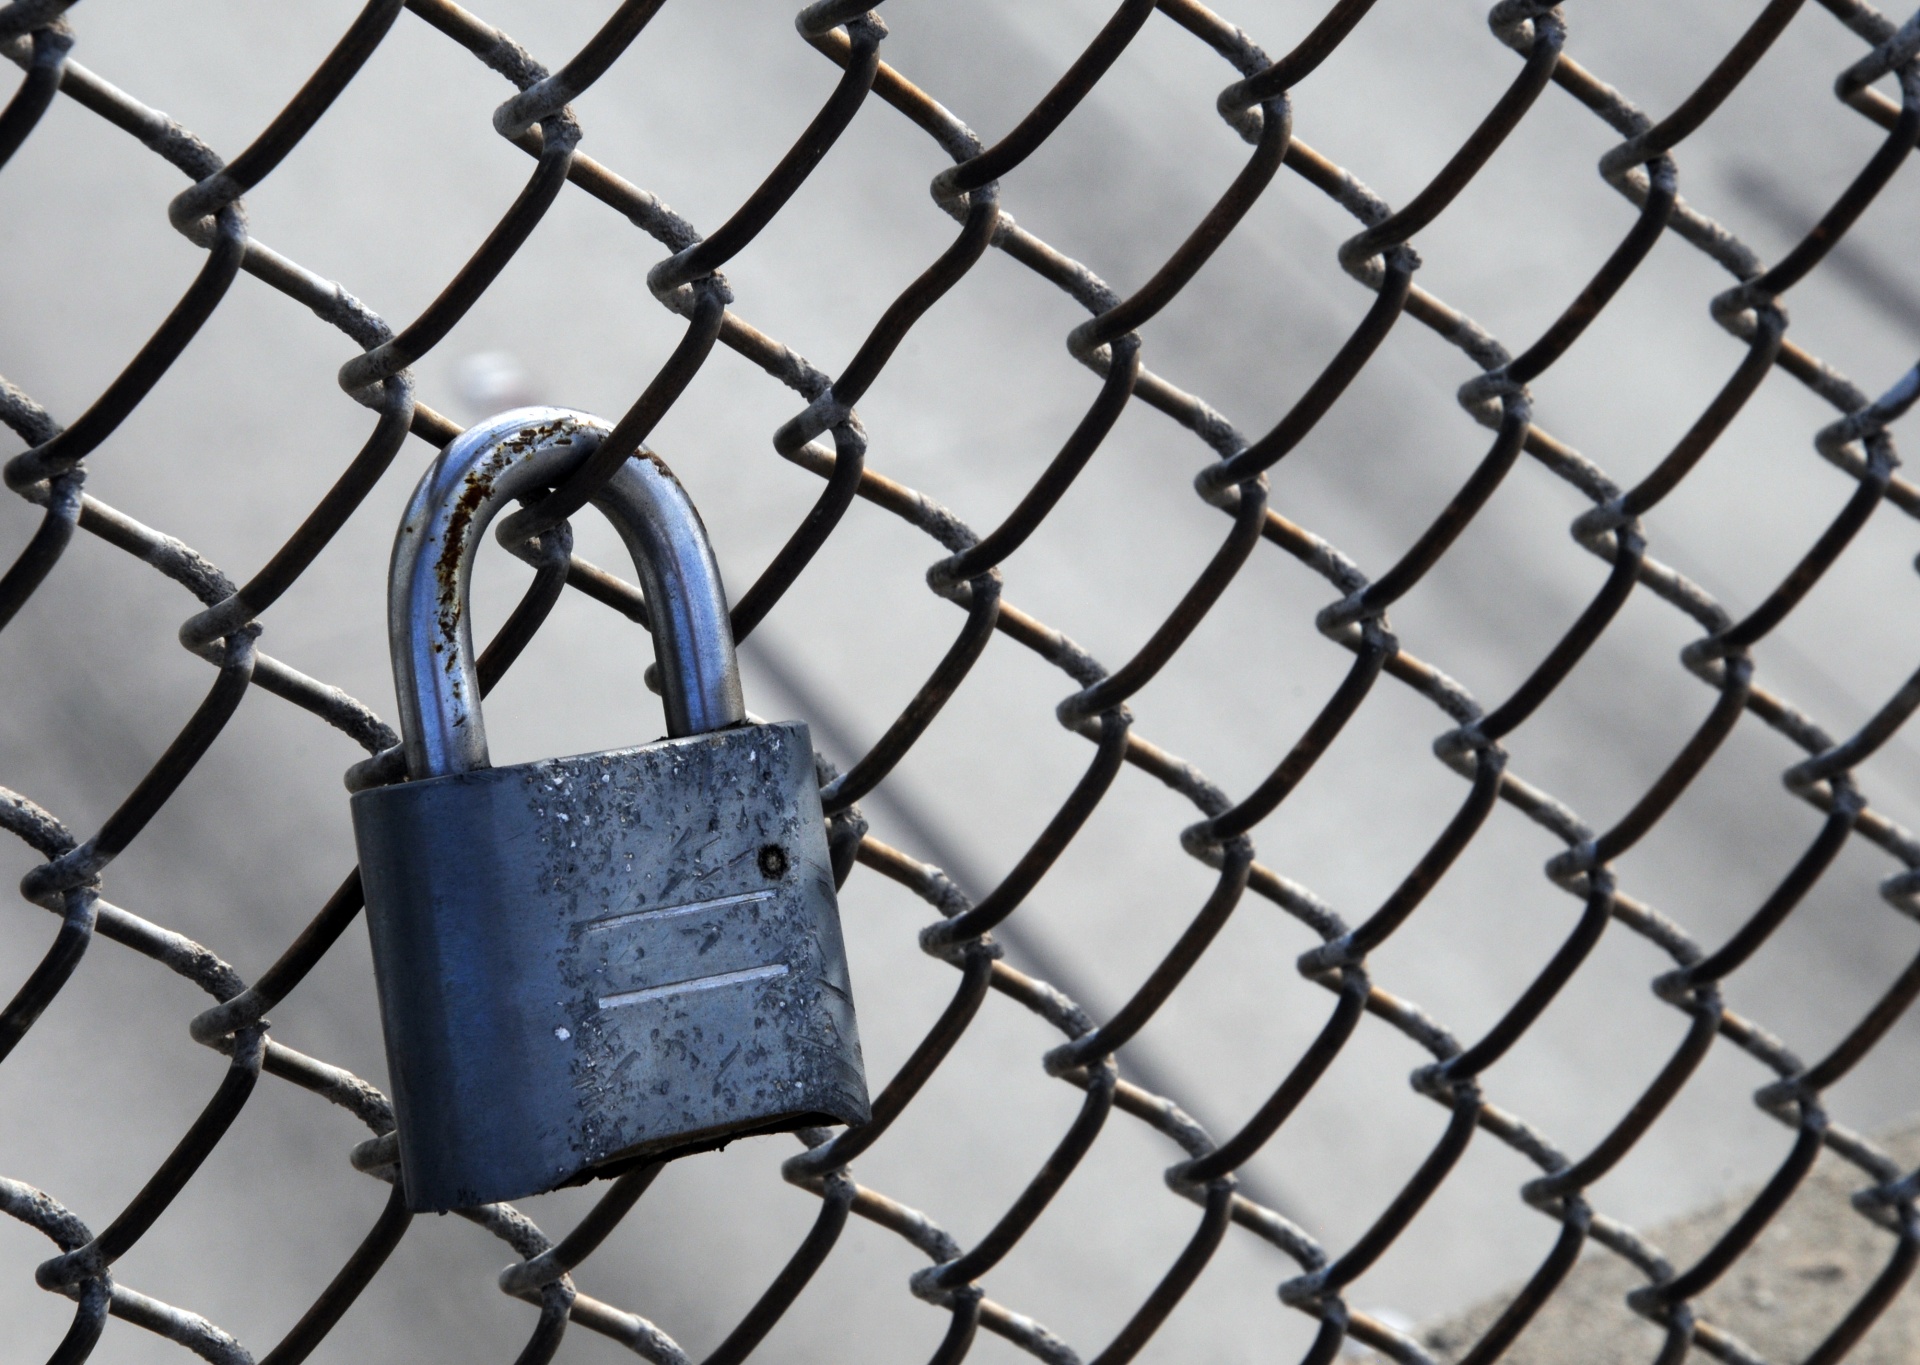 Padlock,lock,fence,metal,chain link fence - free photo from needpix.com AMP...